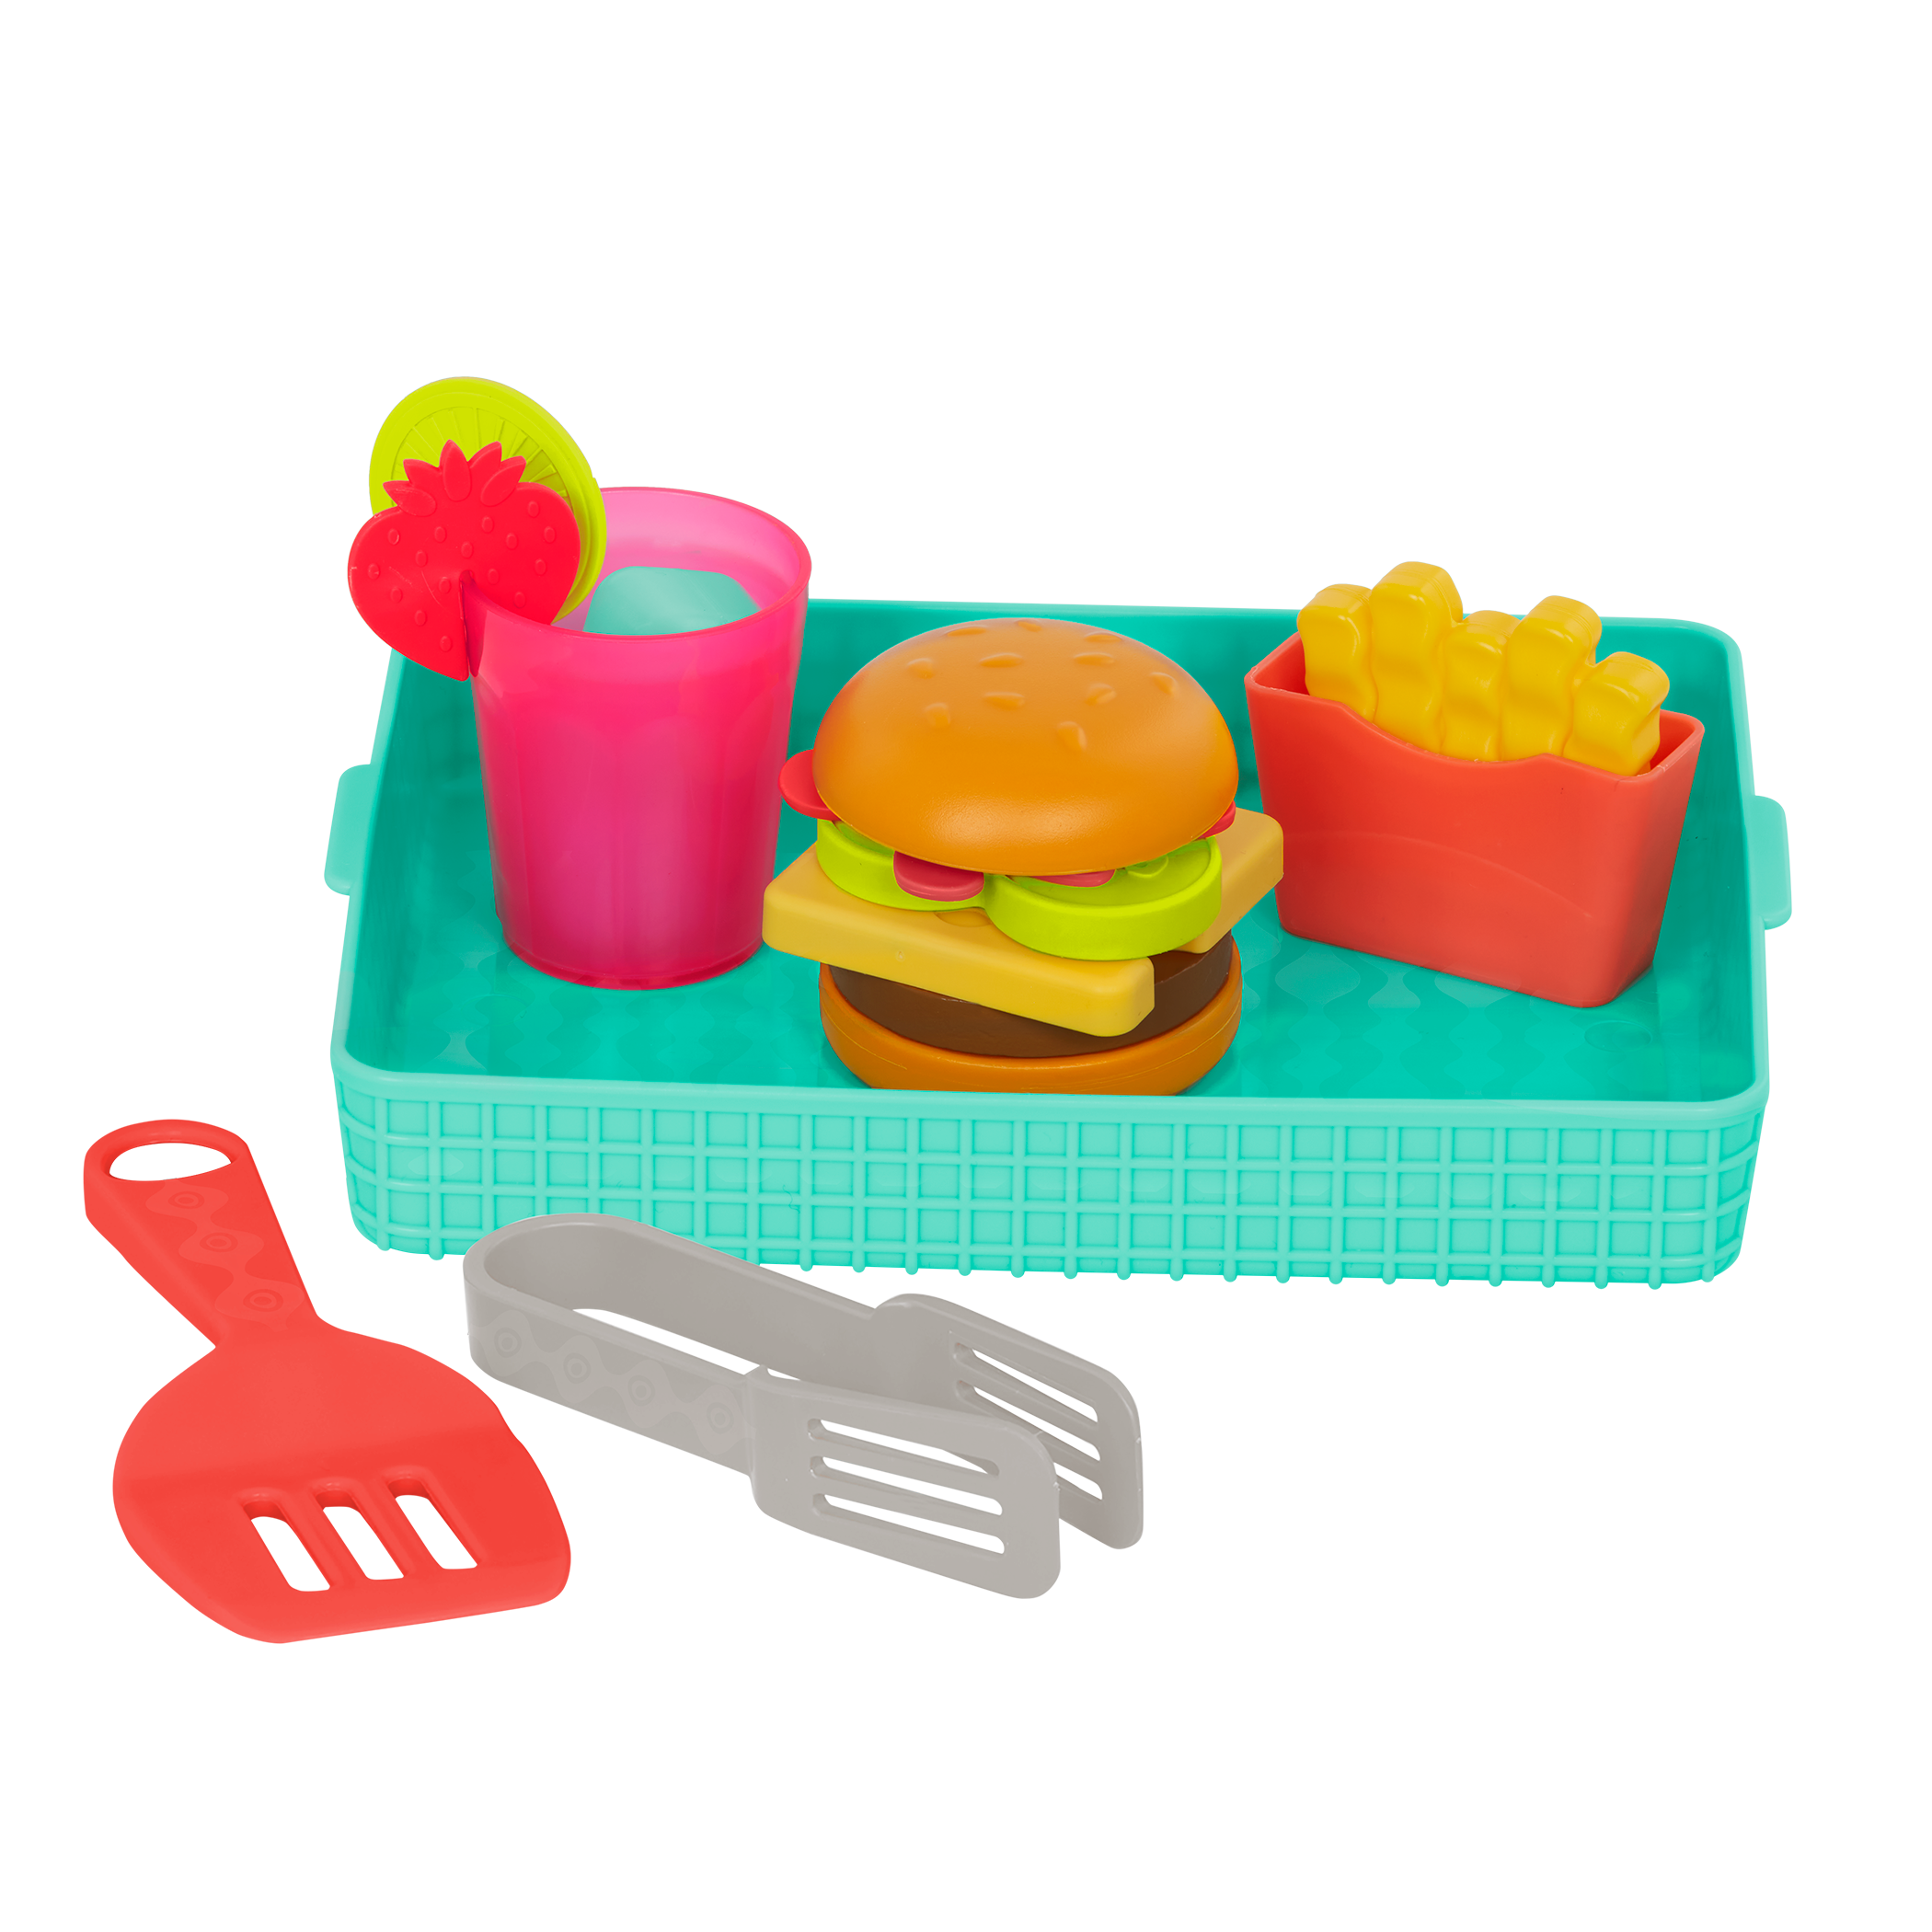 Burger playset for kids.